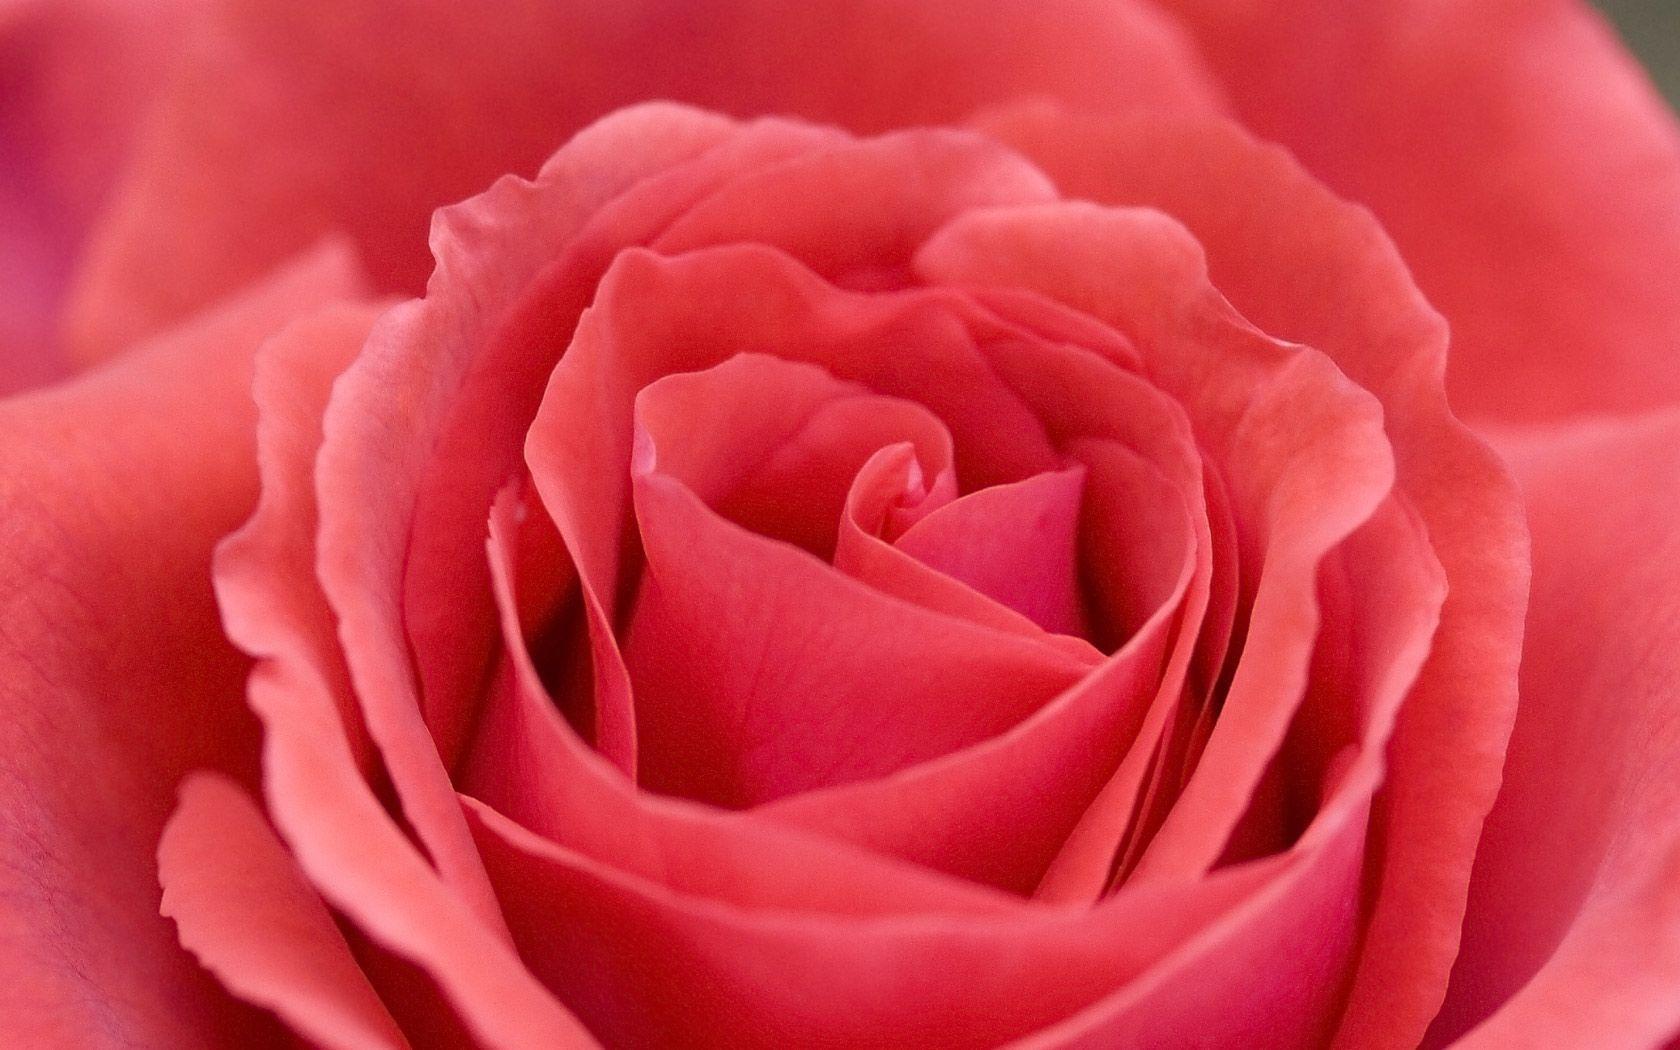 Soft pink Rose image for Background